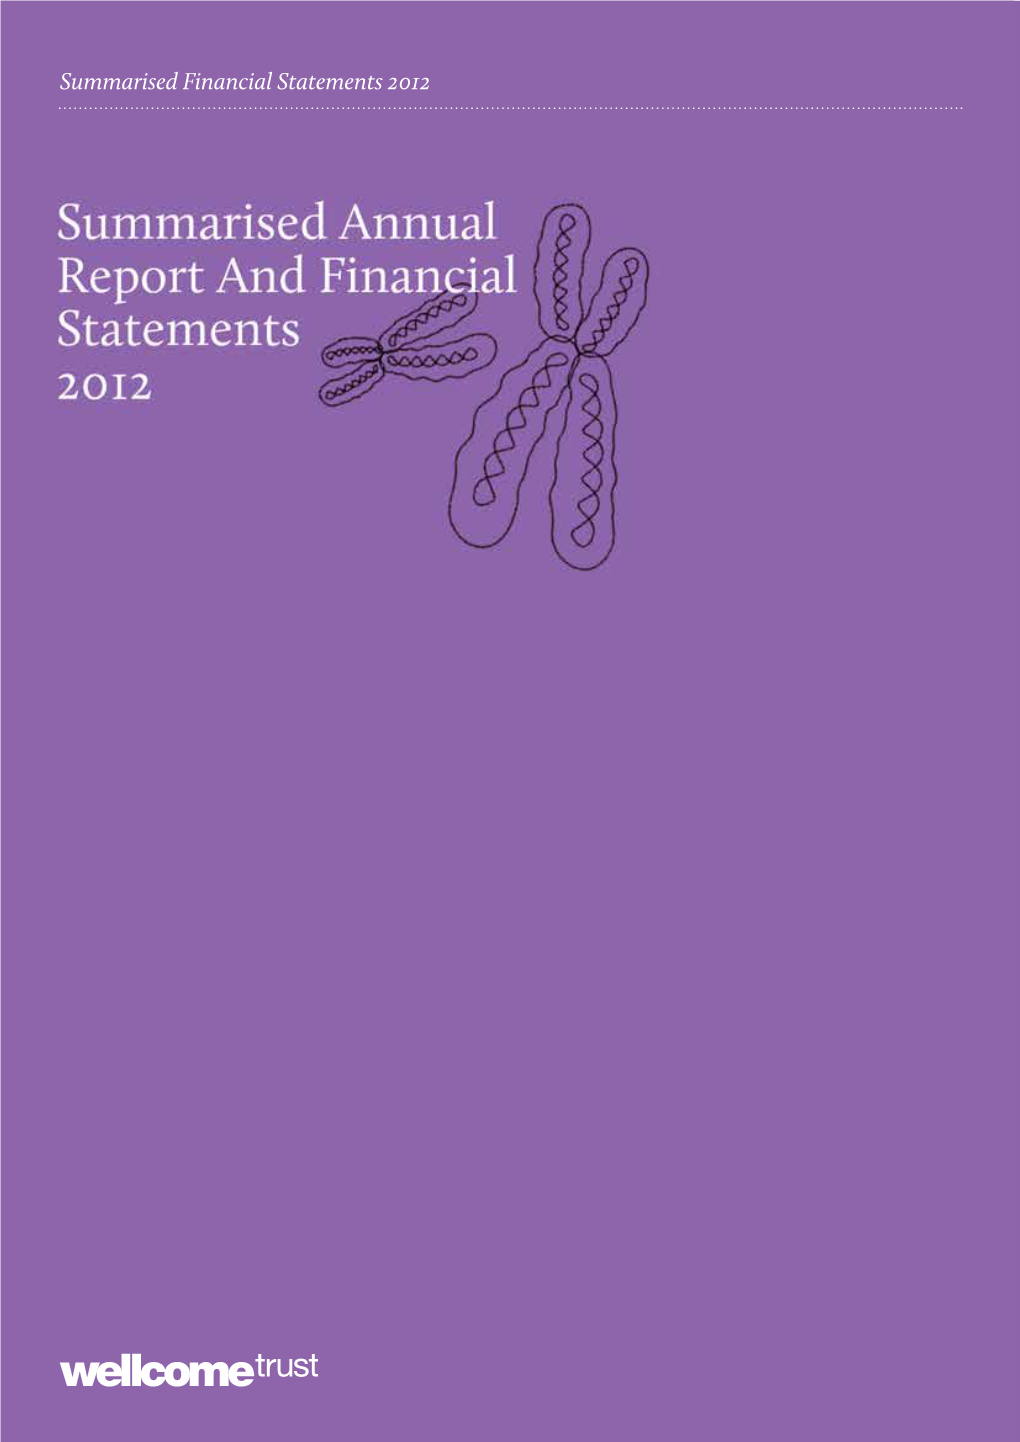 Summarised Financial Statements 2012